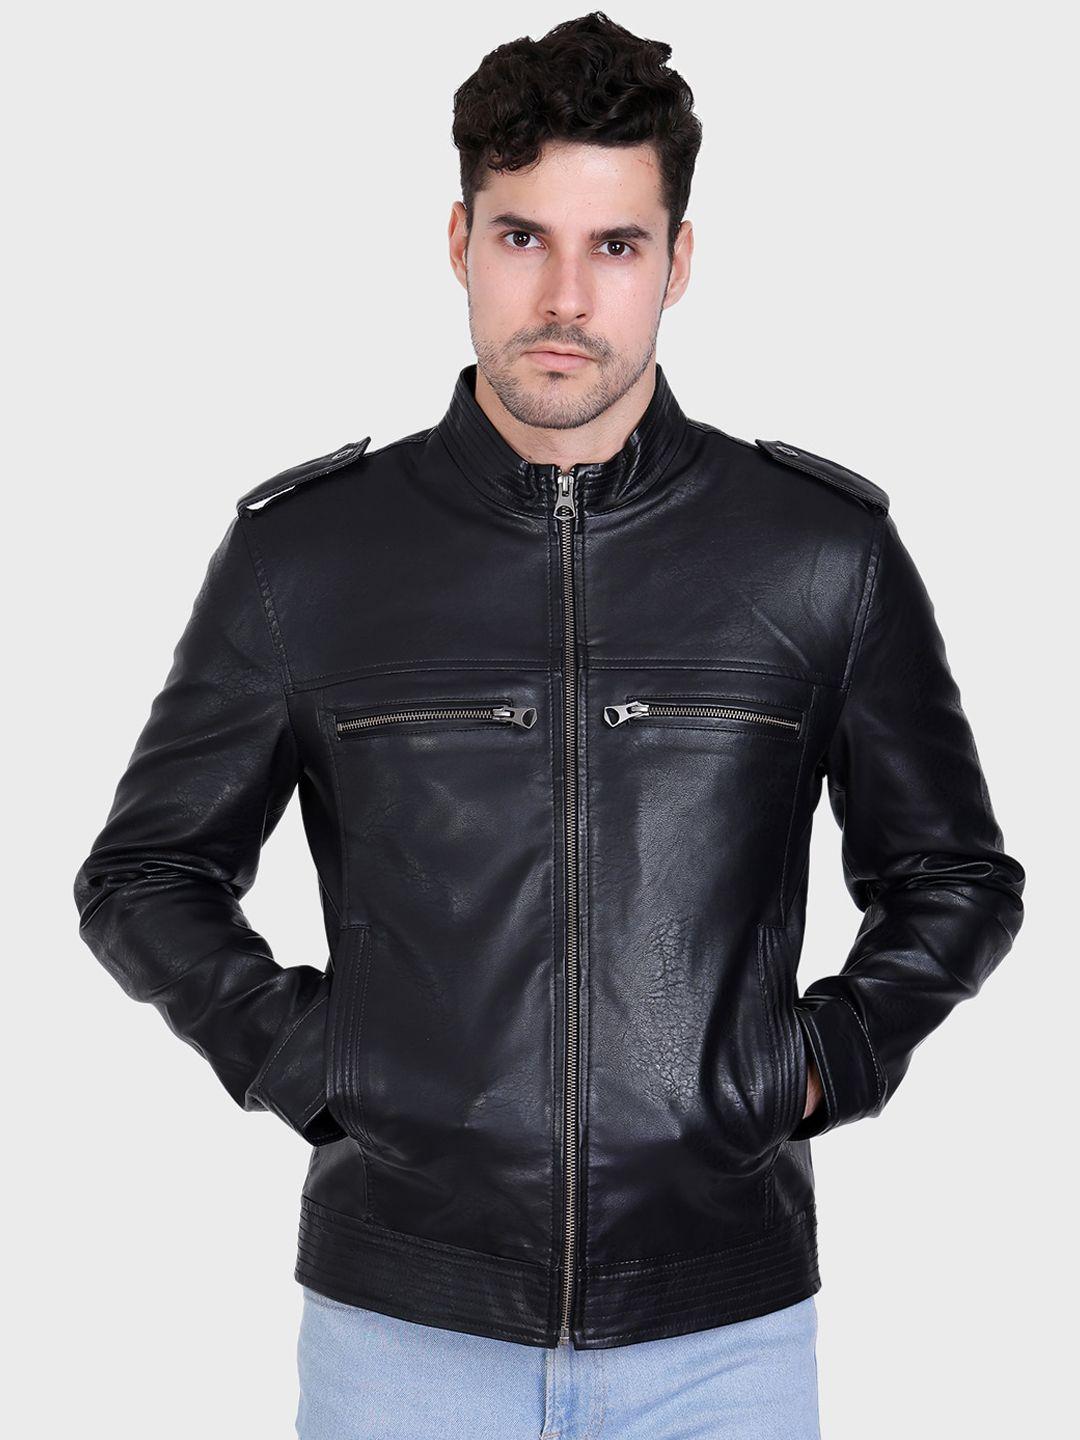 justanned-mock-collar-biker-jacket